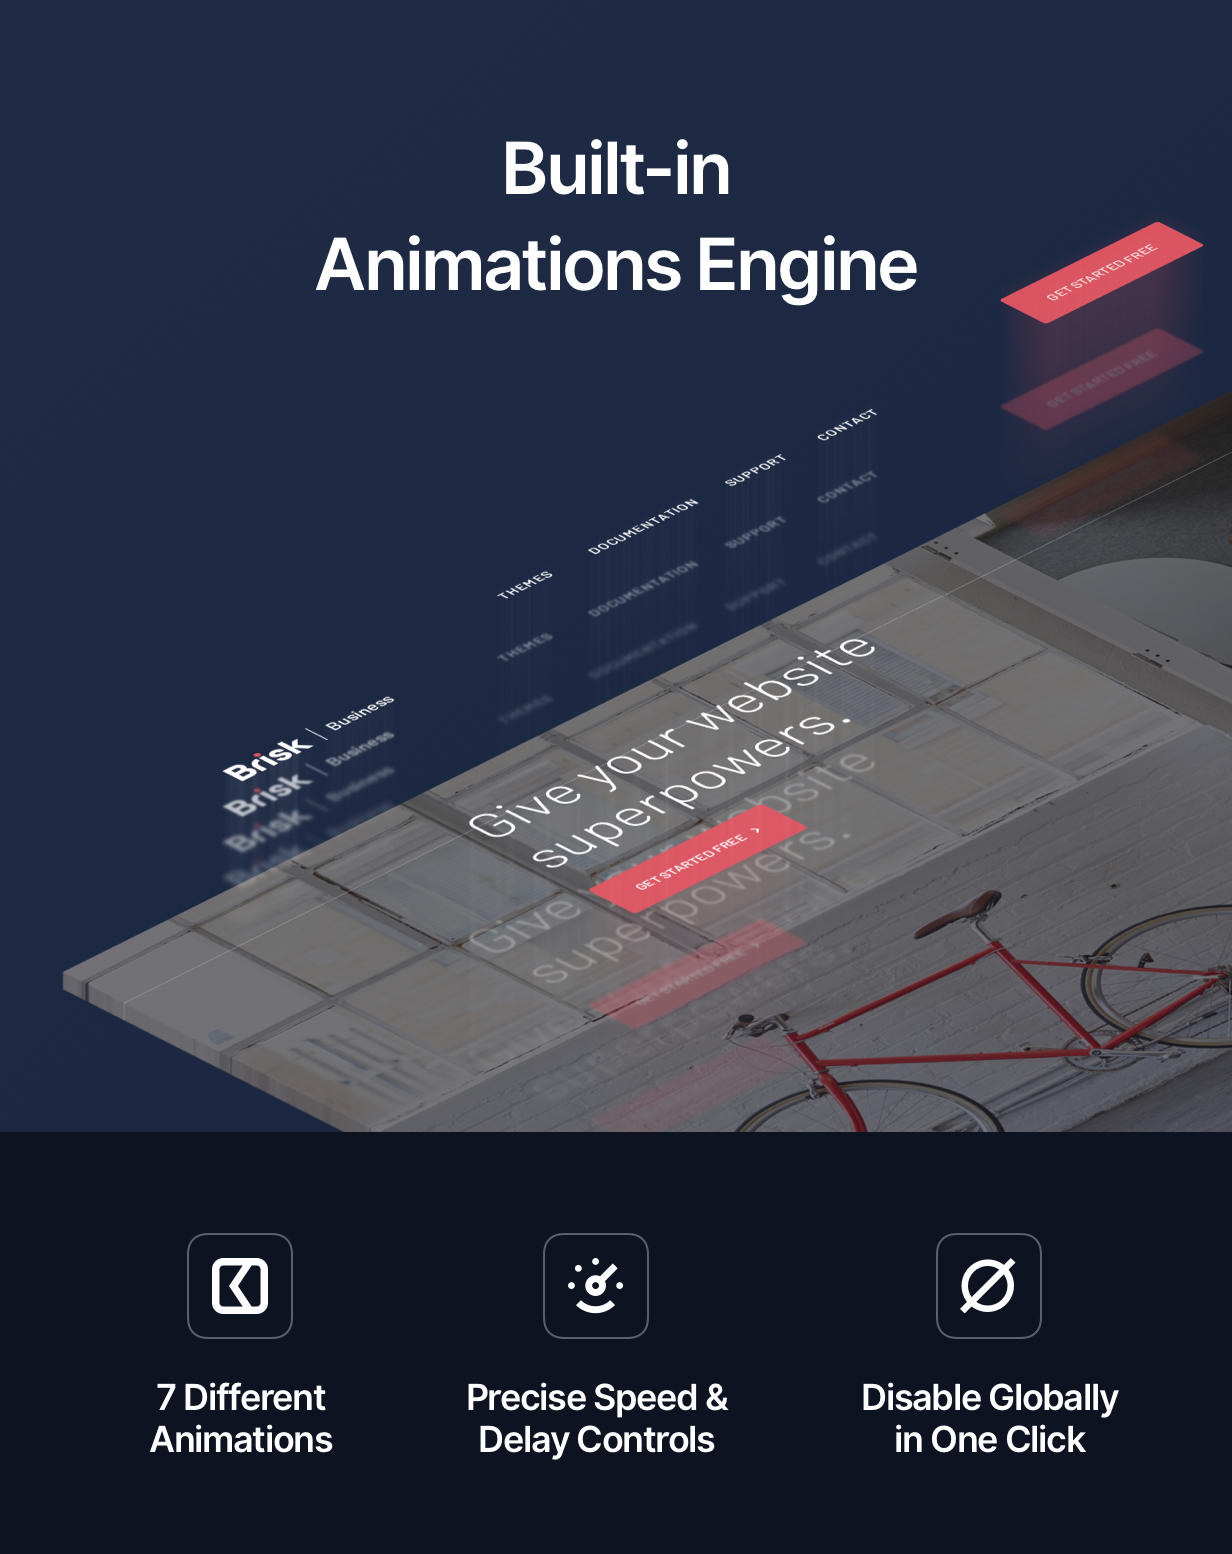 Animations Engine